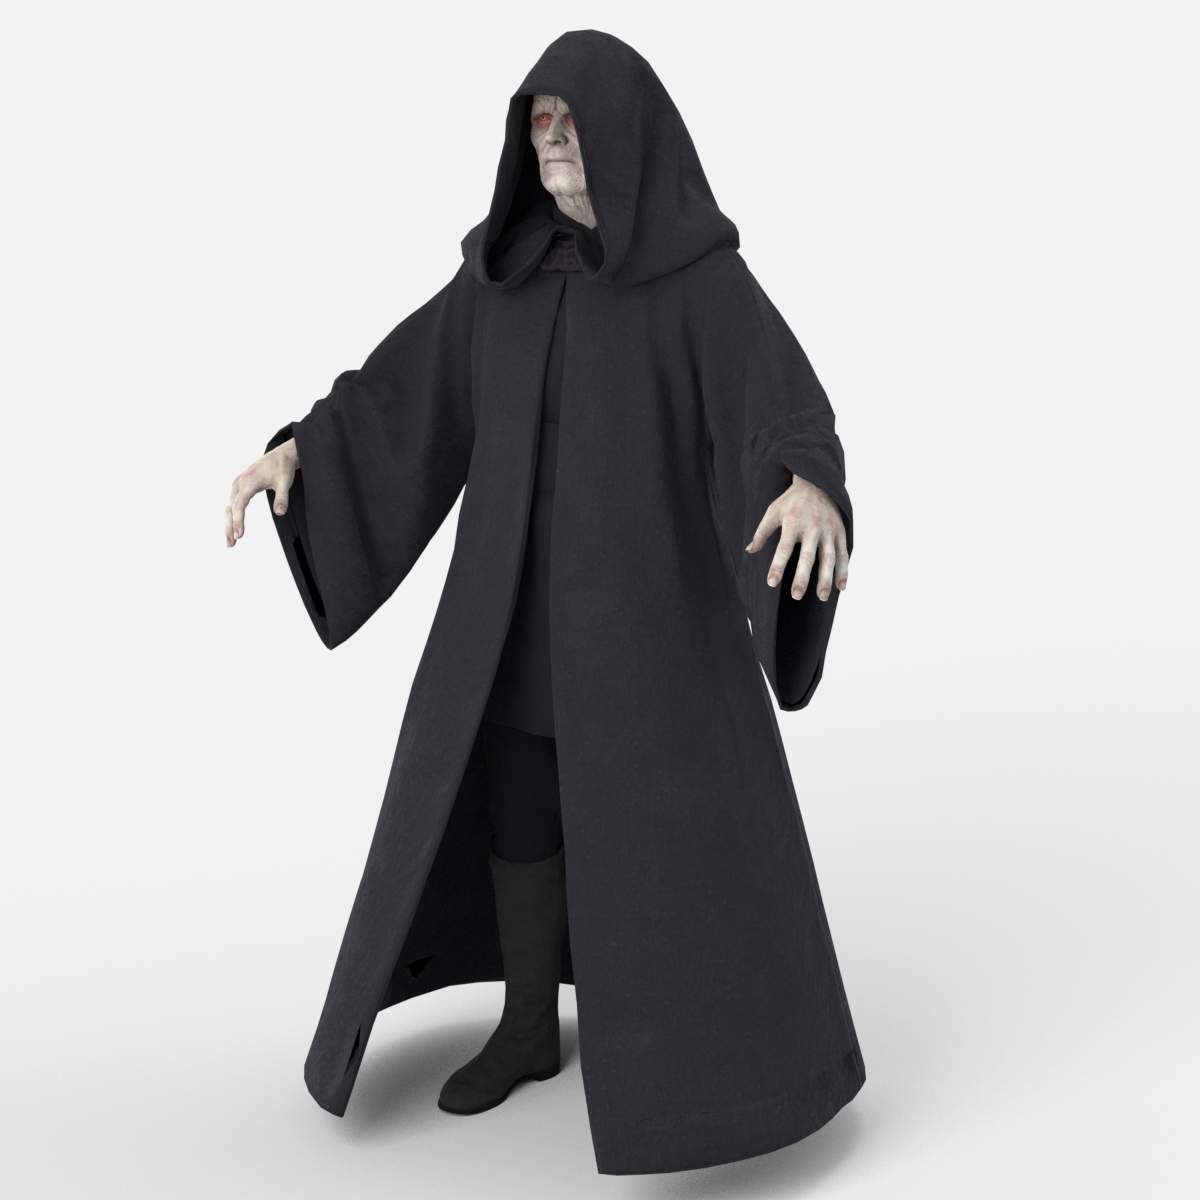 Emperor Palpatine from Star Wars Battlefront 2 Free 3D Model